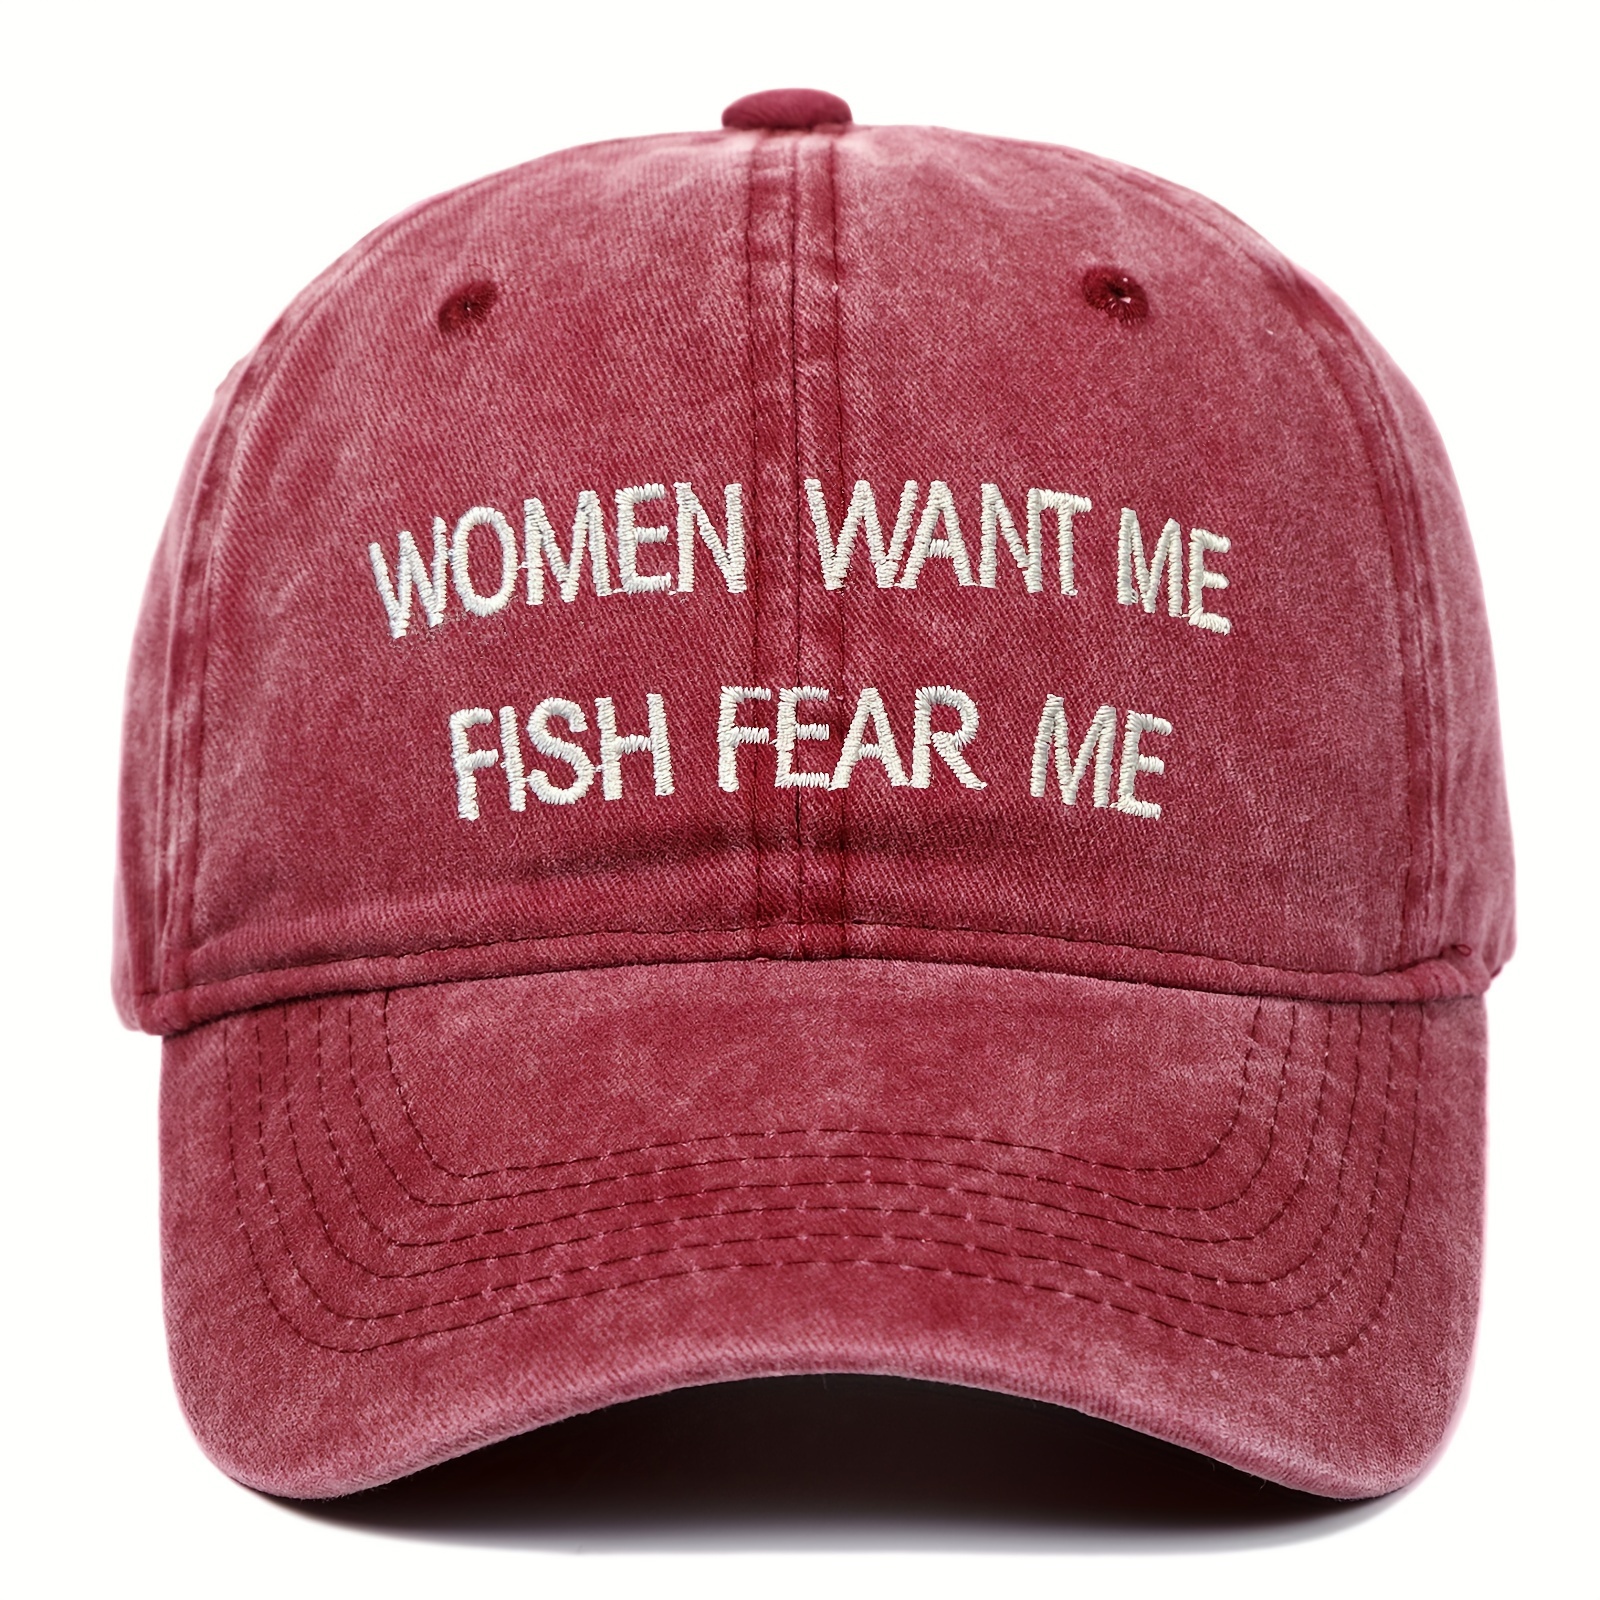 Women Want Me Fish Fear Me Hat, Cap (Style: 6297F Flat Bill Twill Flexfit Cap, Color: Royal, Size: S/M)